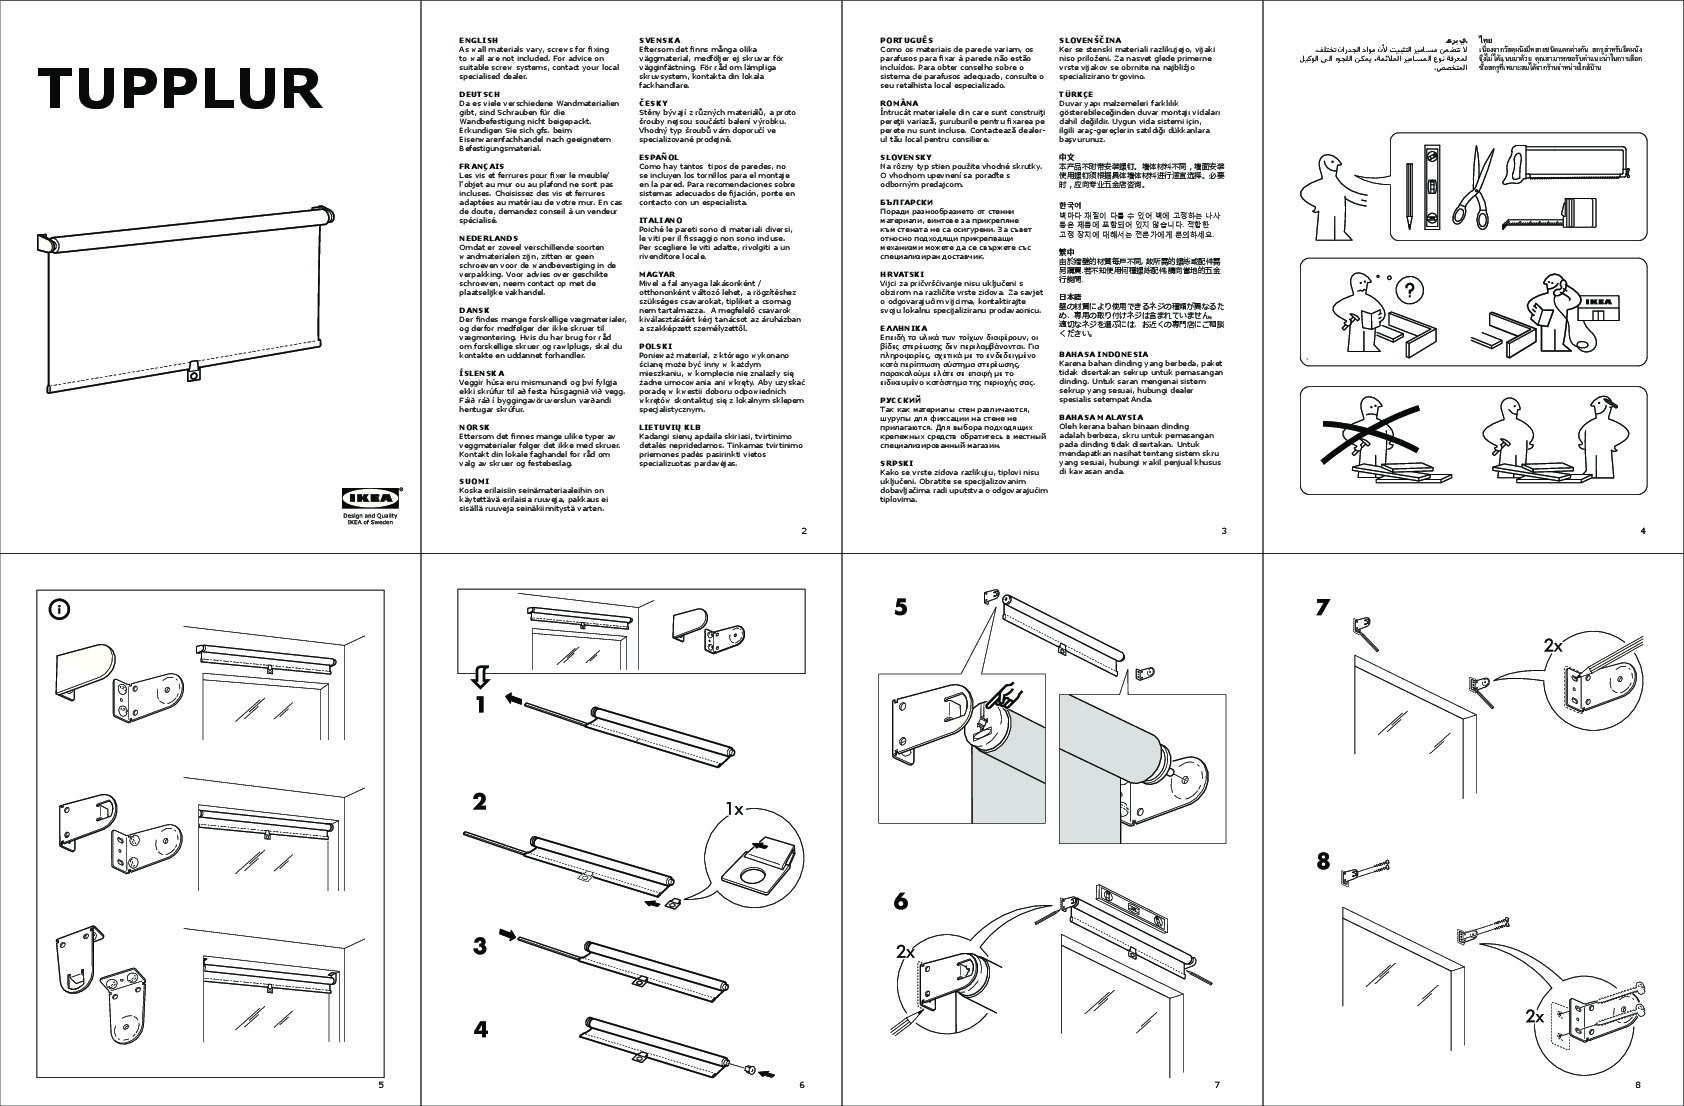 Ikea tupplur инструкция